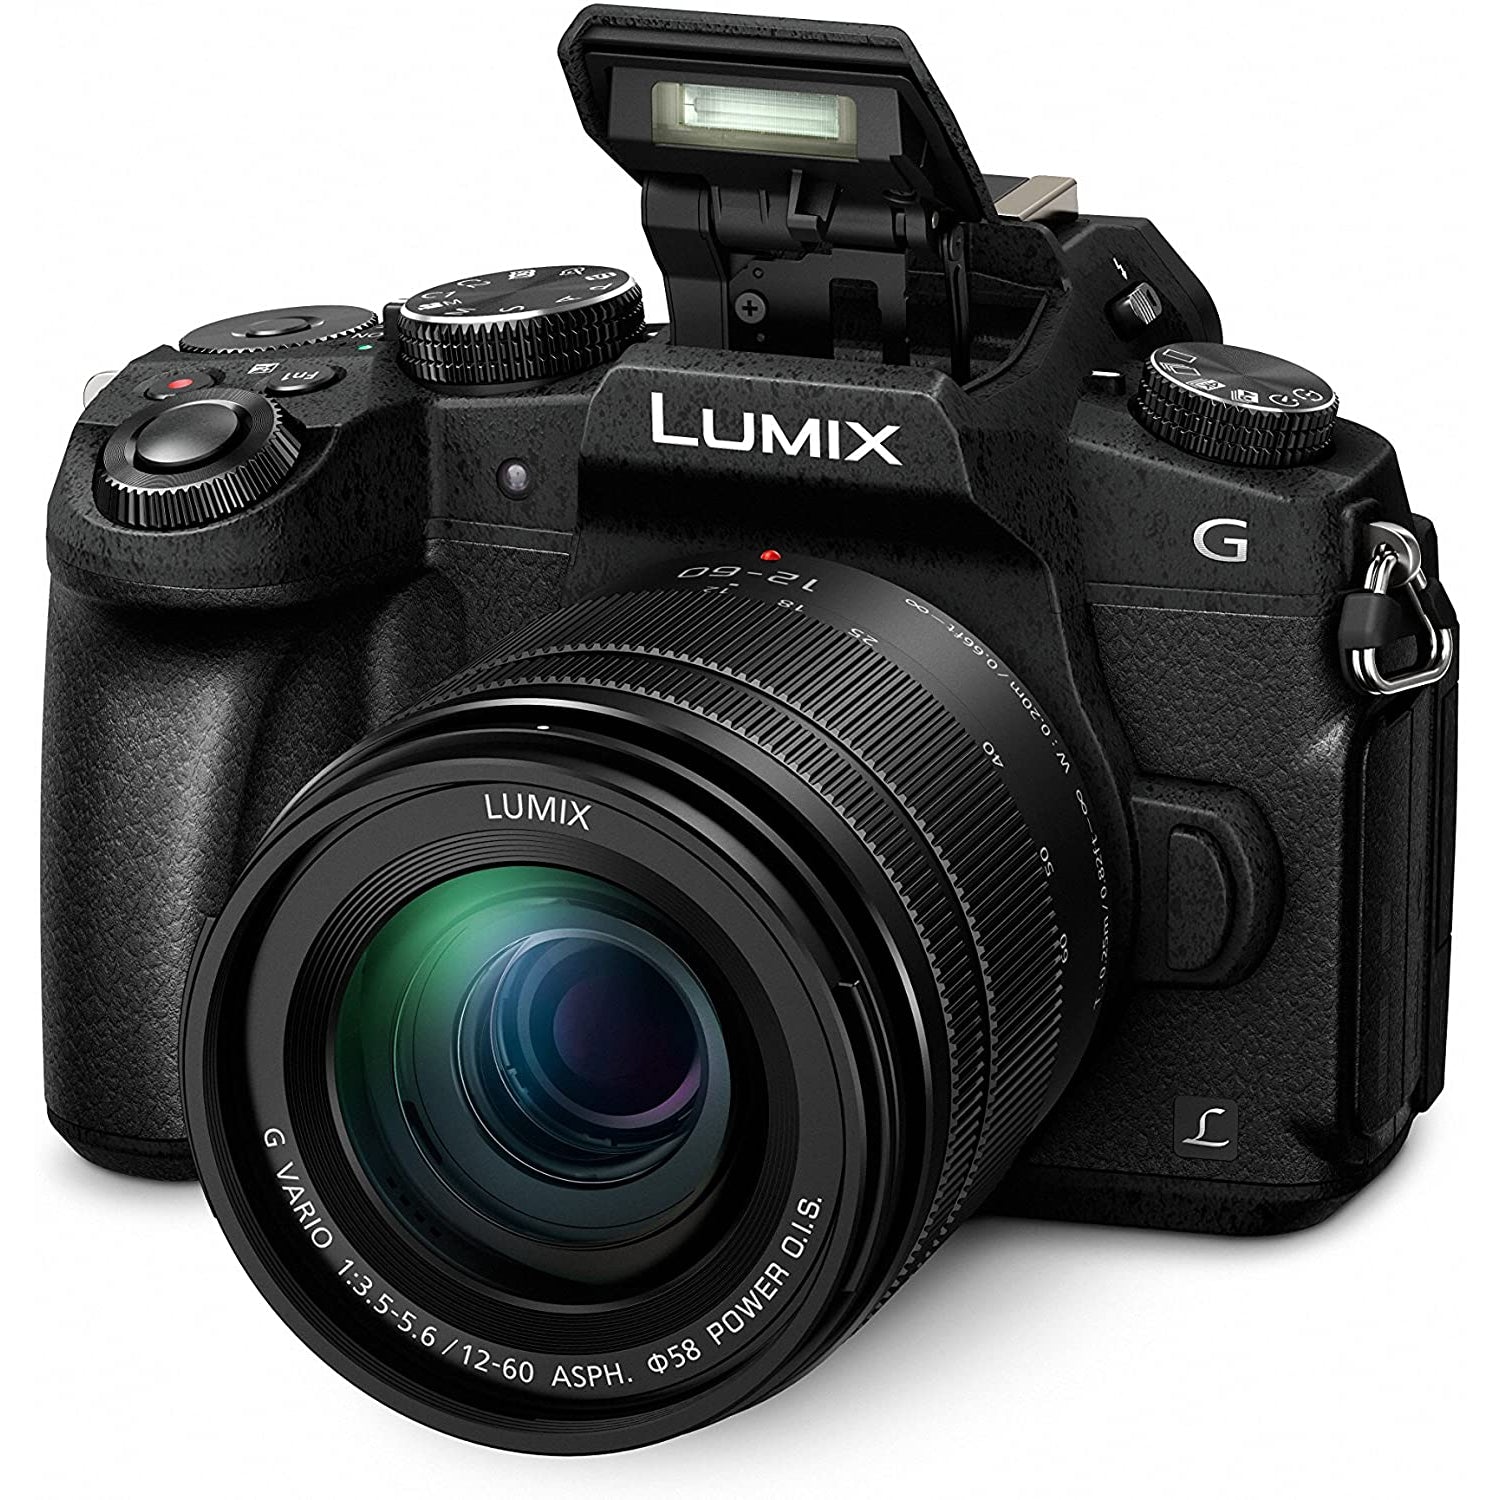 Panasonic LUMIX DMC-G80 Professional Camera with 12-60 mm Lens - Black